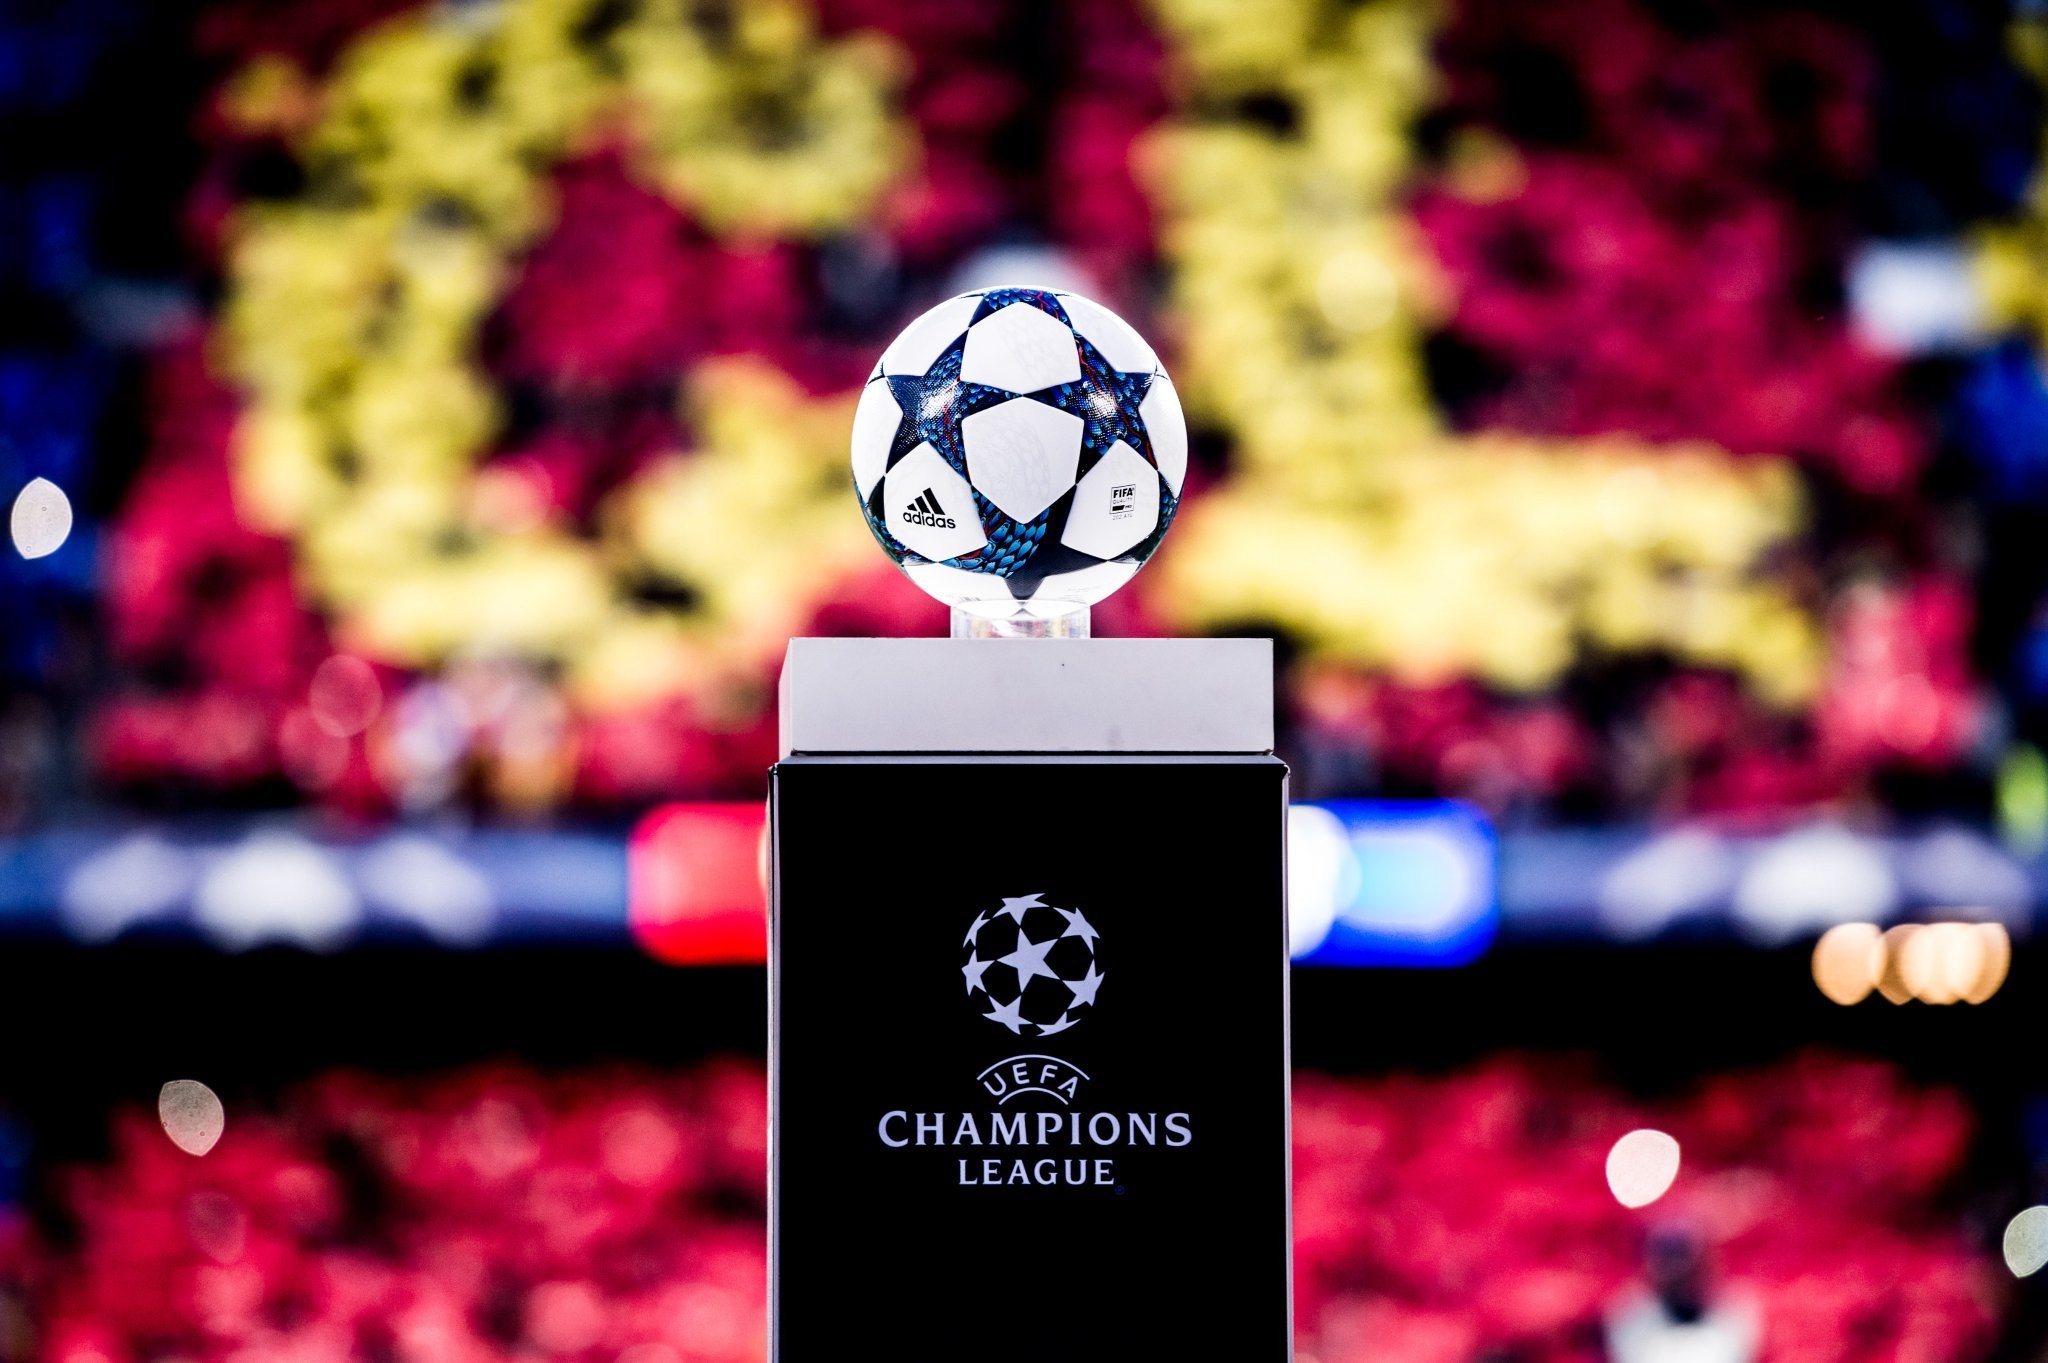 Champions League, FC Barcelona, Camp Nou, Ball, UEFA, Soccer clubs, Soccer, Adidas Wallpaper